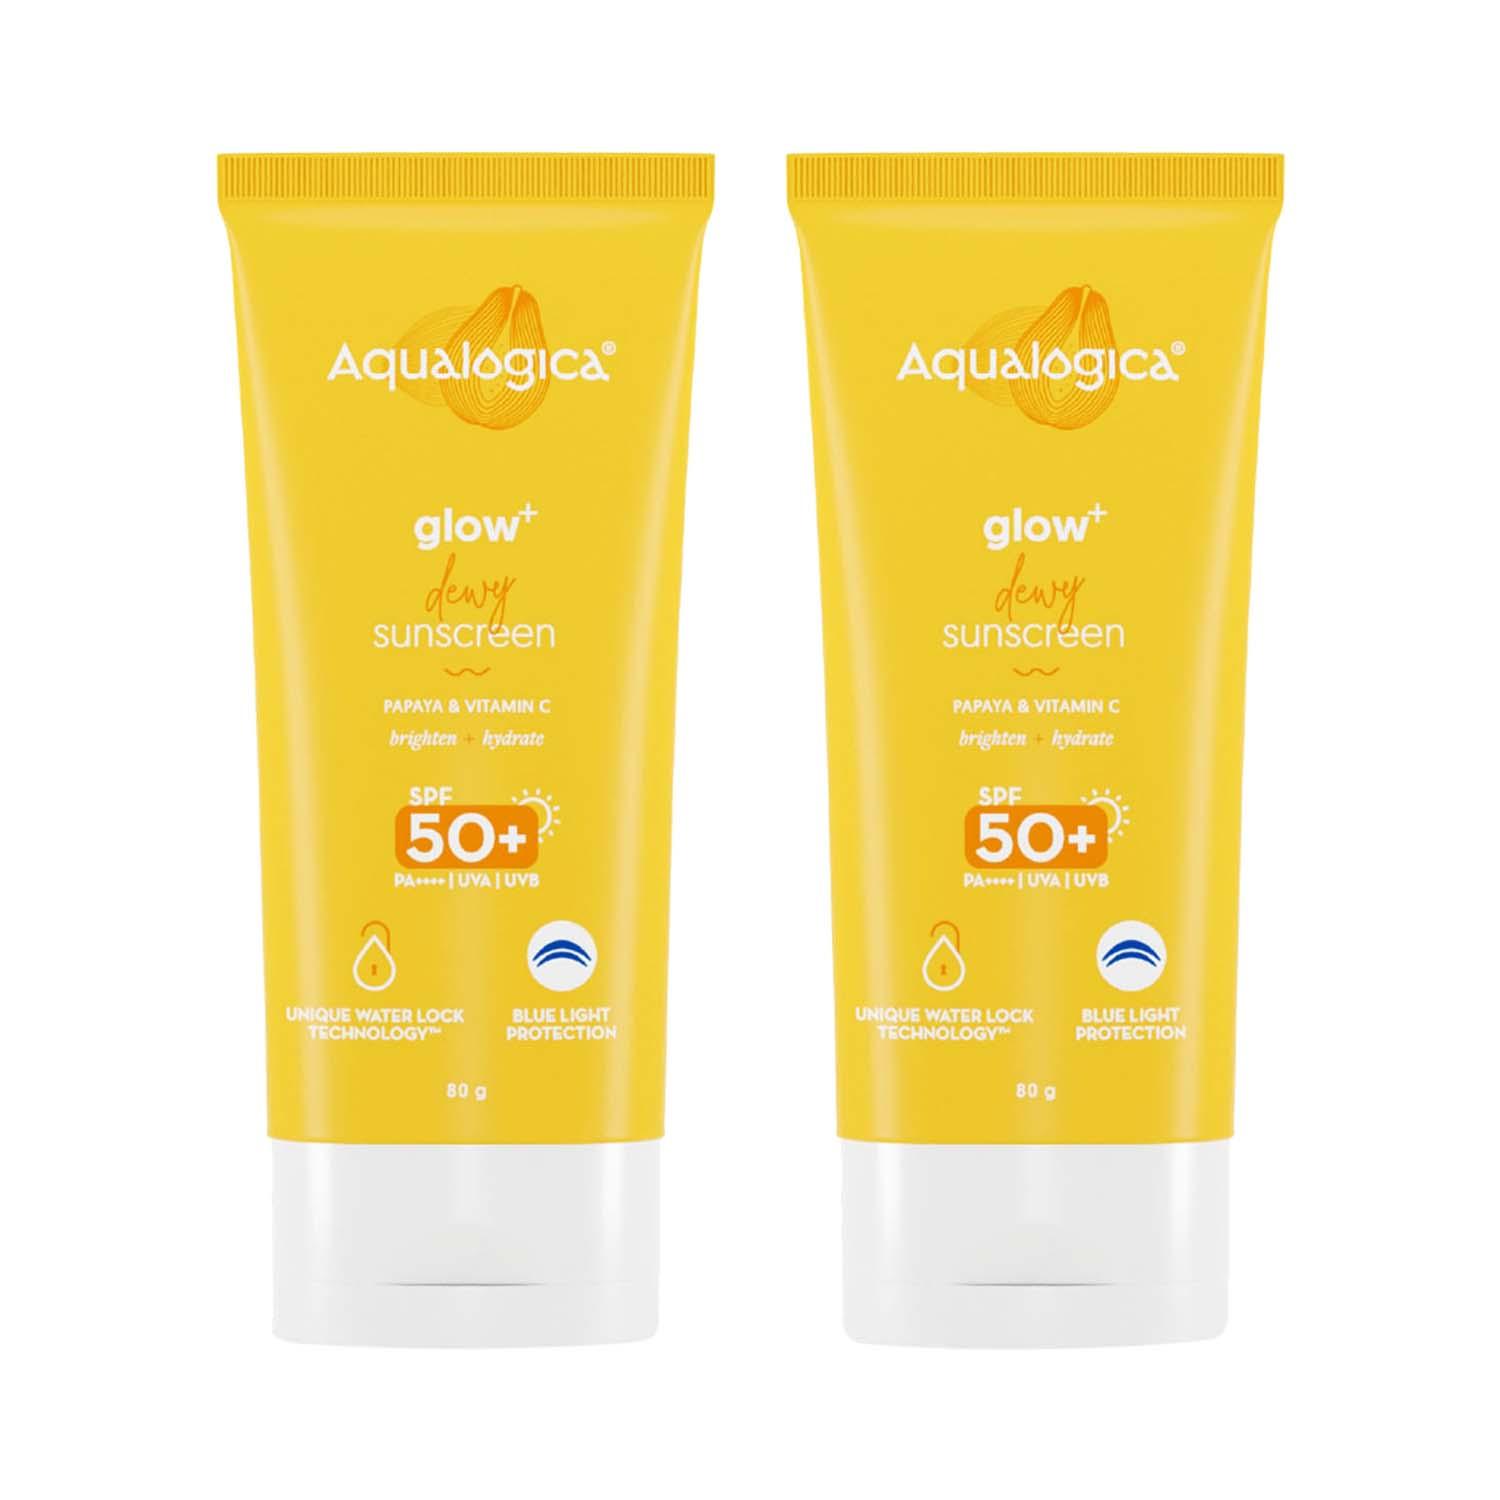 Aqualogica | Aqualogica Glow+ Dewy Sunscreen - 80g (Pack of 2) Combo